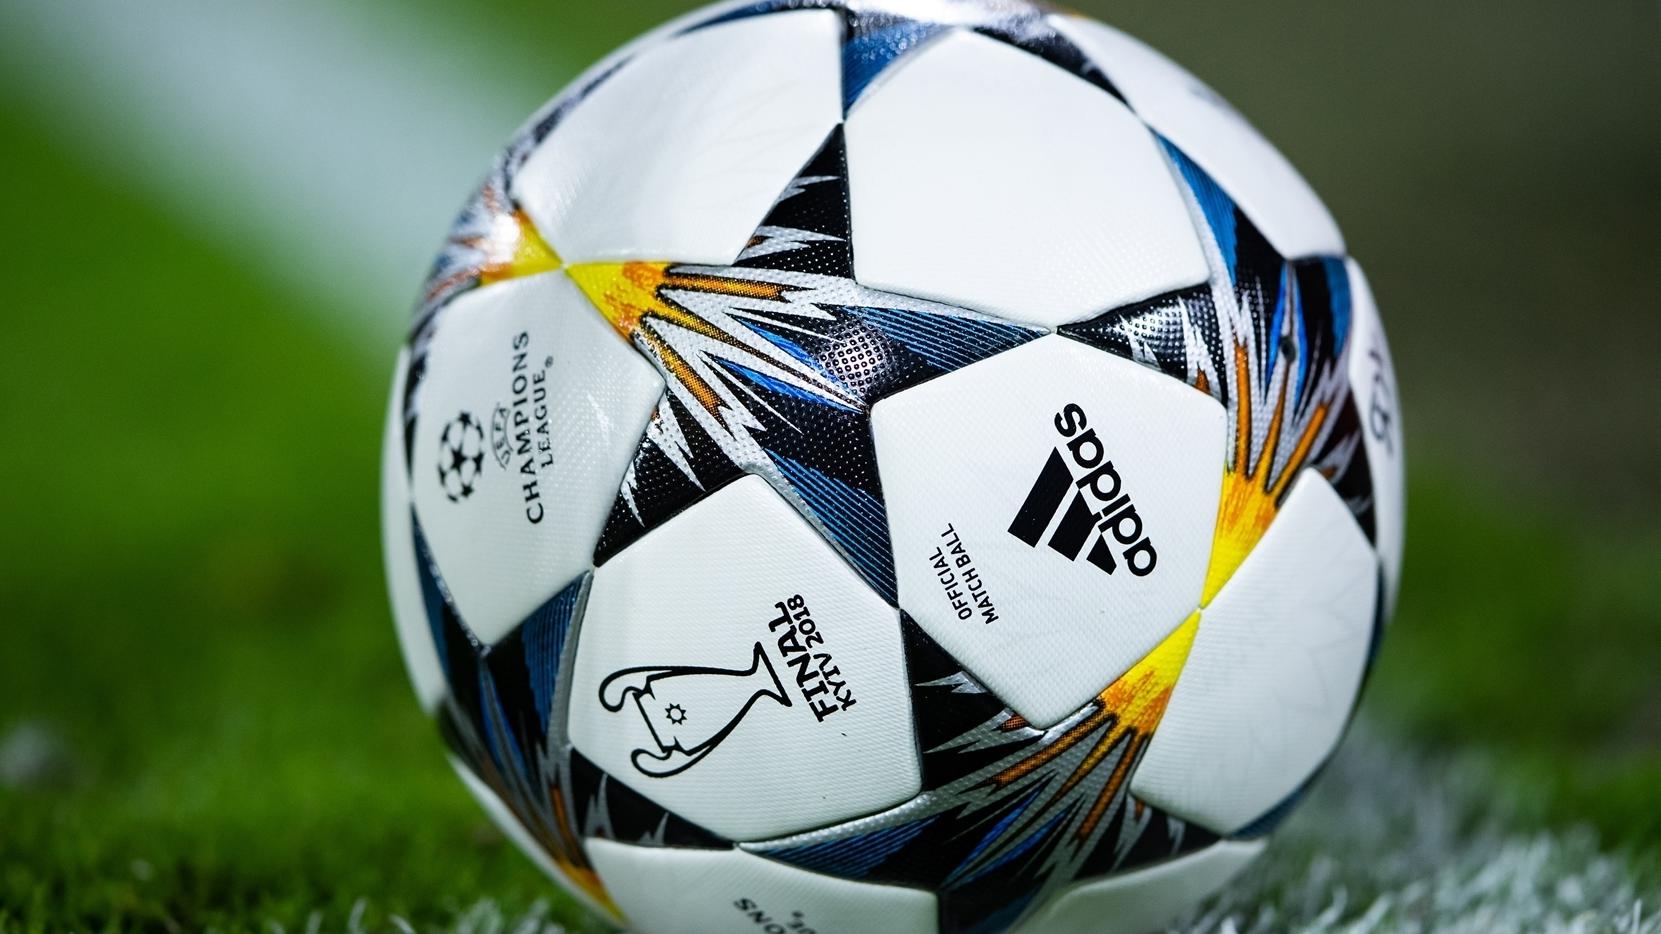 Adidas announced as exclusive global sponsor of UEFA Women's